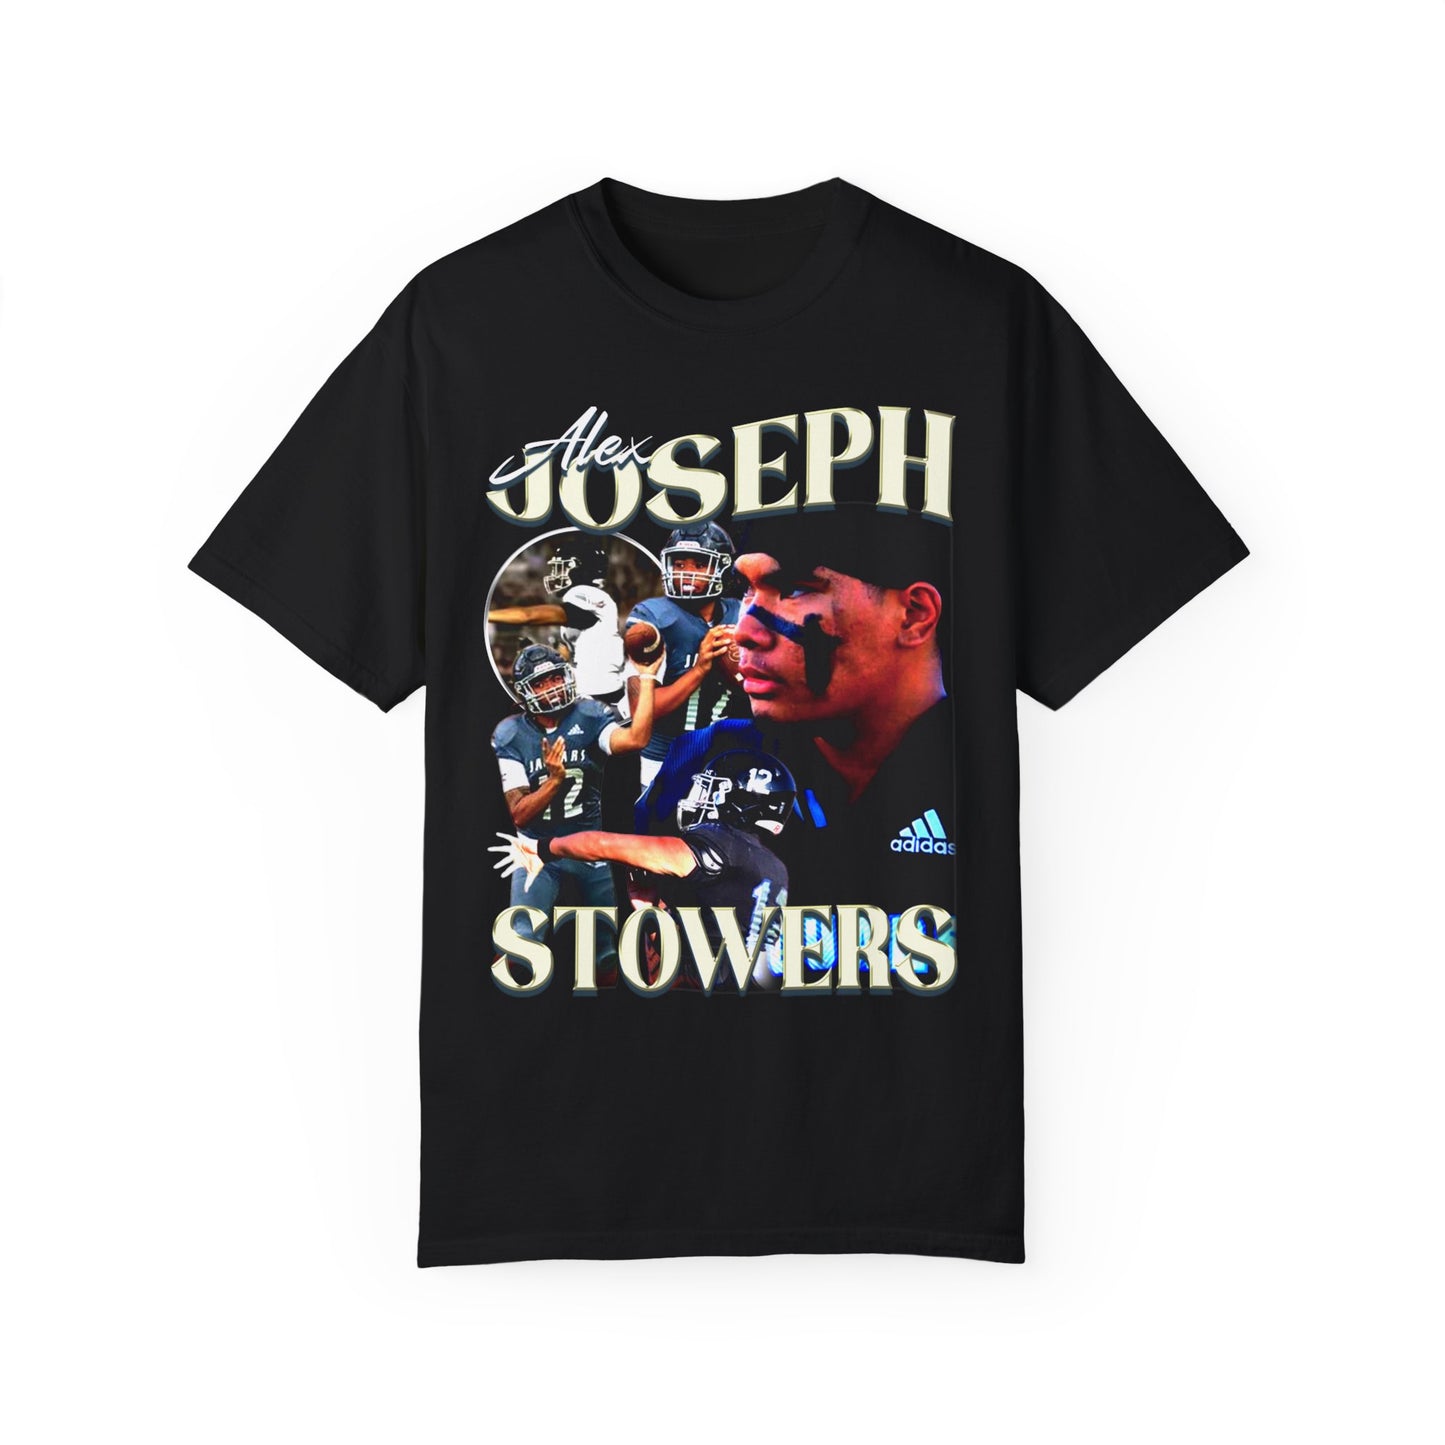 Alex Joseph Stowers Graphic T-shirt